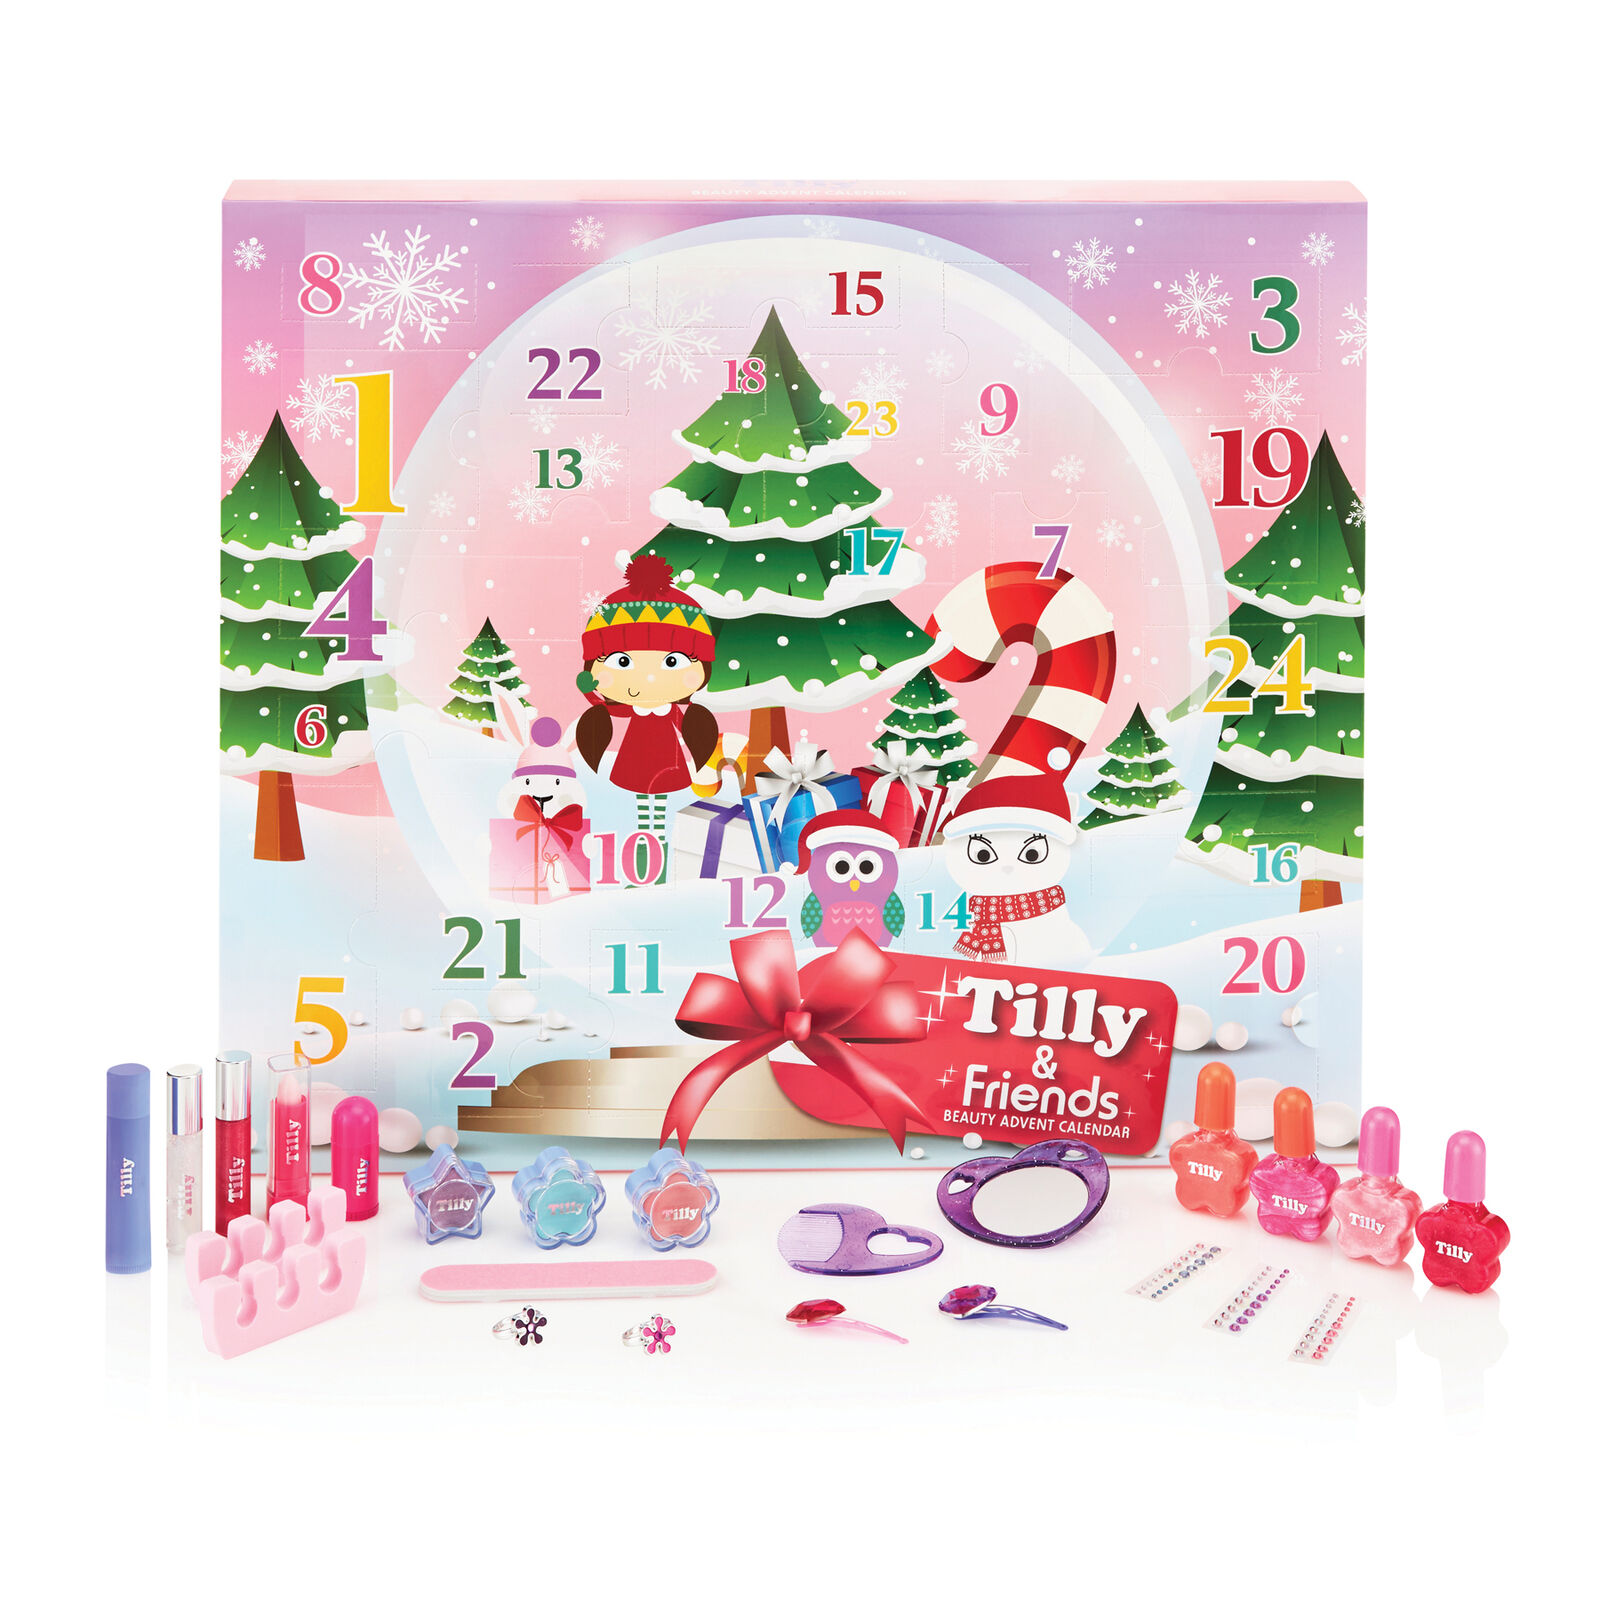 Christmas Beauty Advent Calendar - Tilly and Friends Beauty for Children